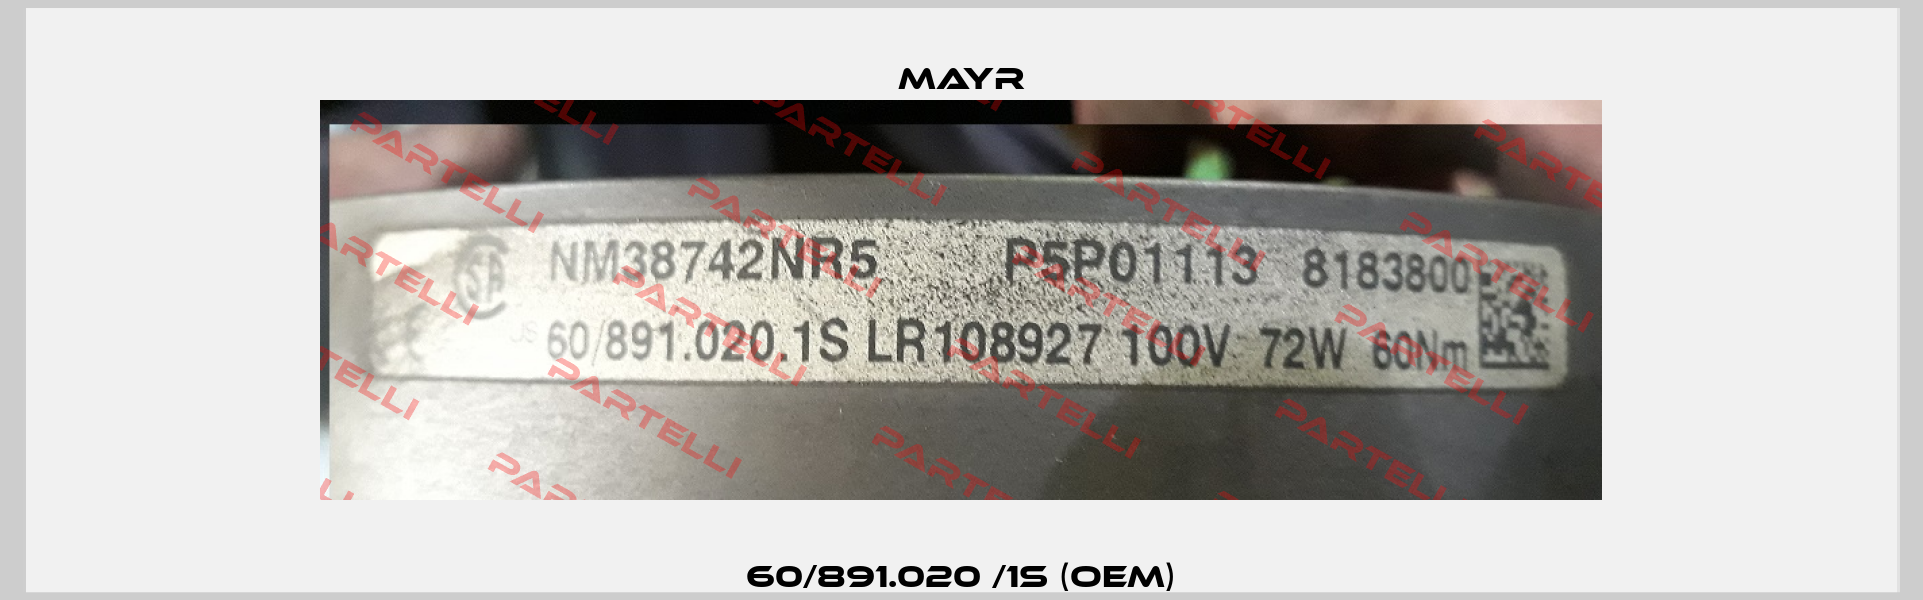 60/891.020 /1S (OEM) Mayr